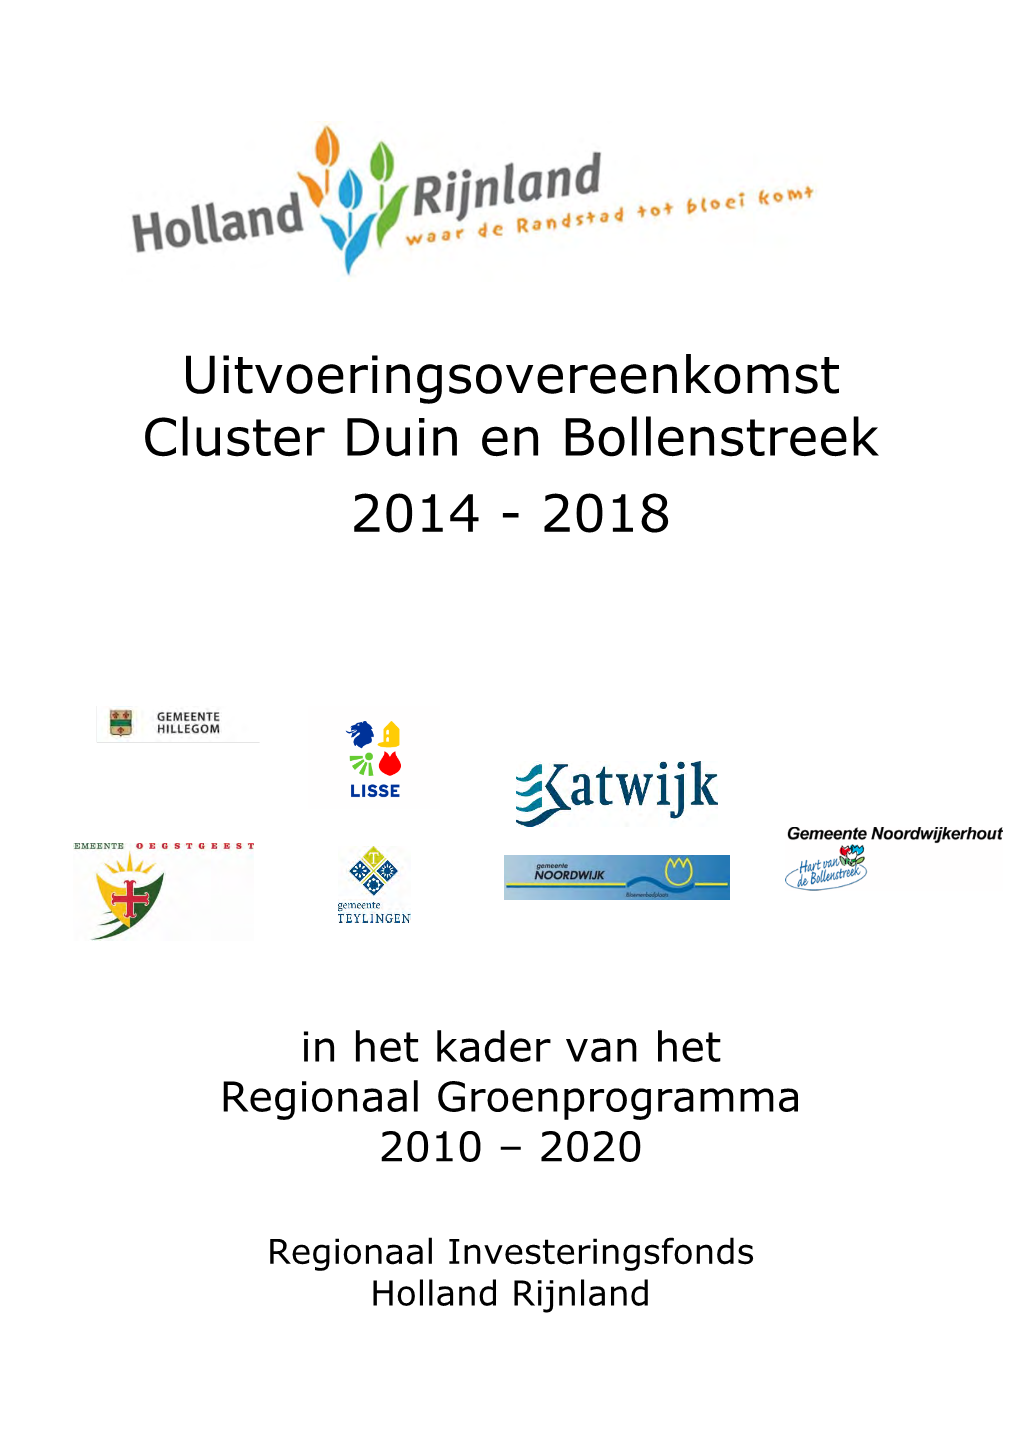 Uitvoeringsovereenkomst Cluster Duin En Bollenstreek 2014 - 2018